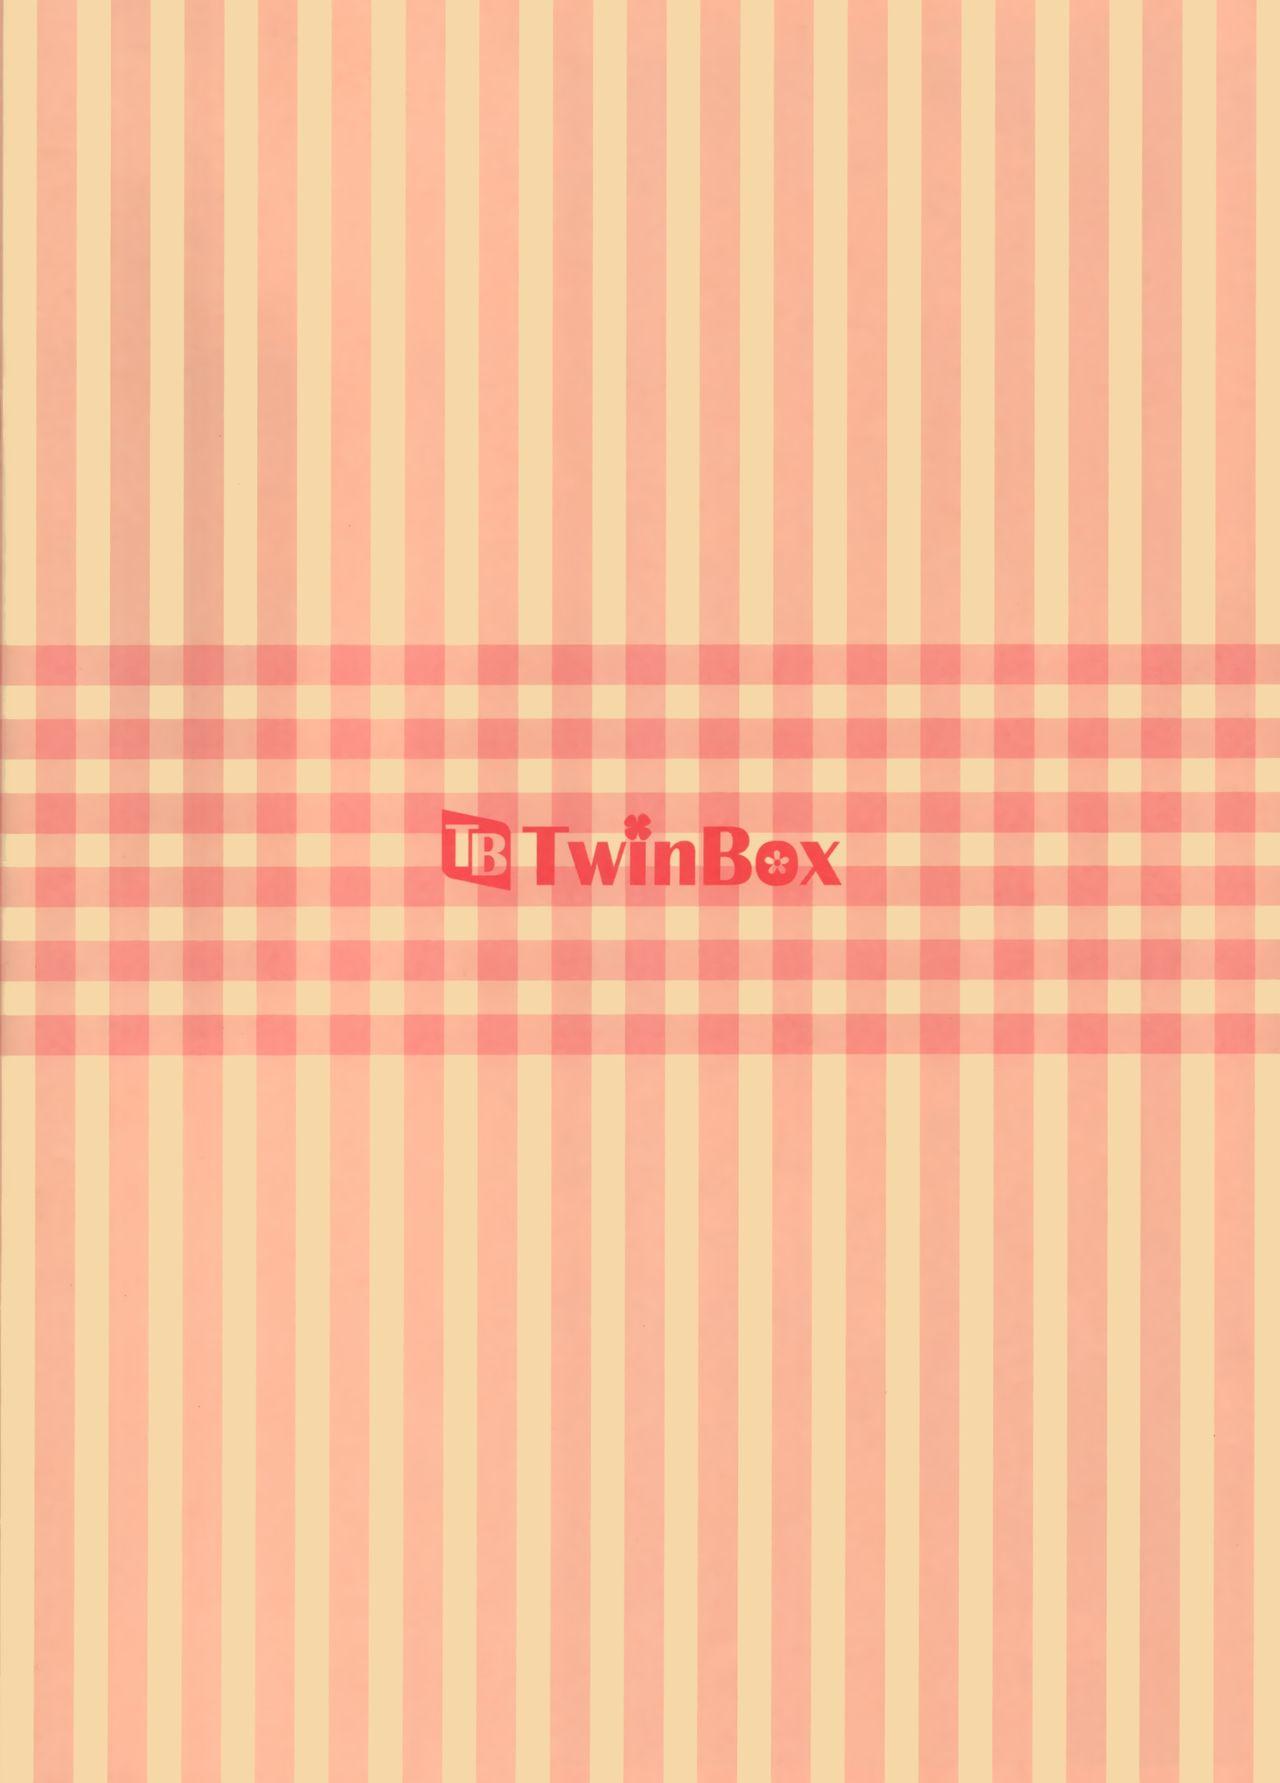 TwinBOOKs 08 9